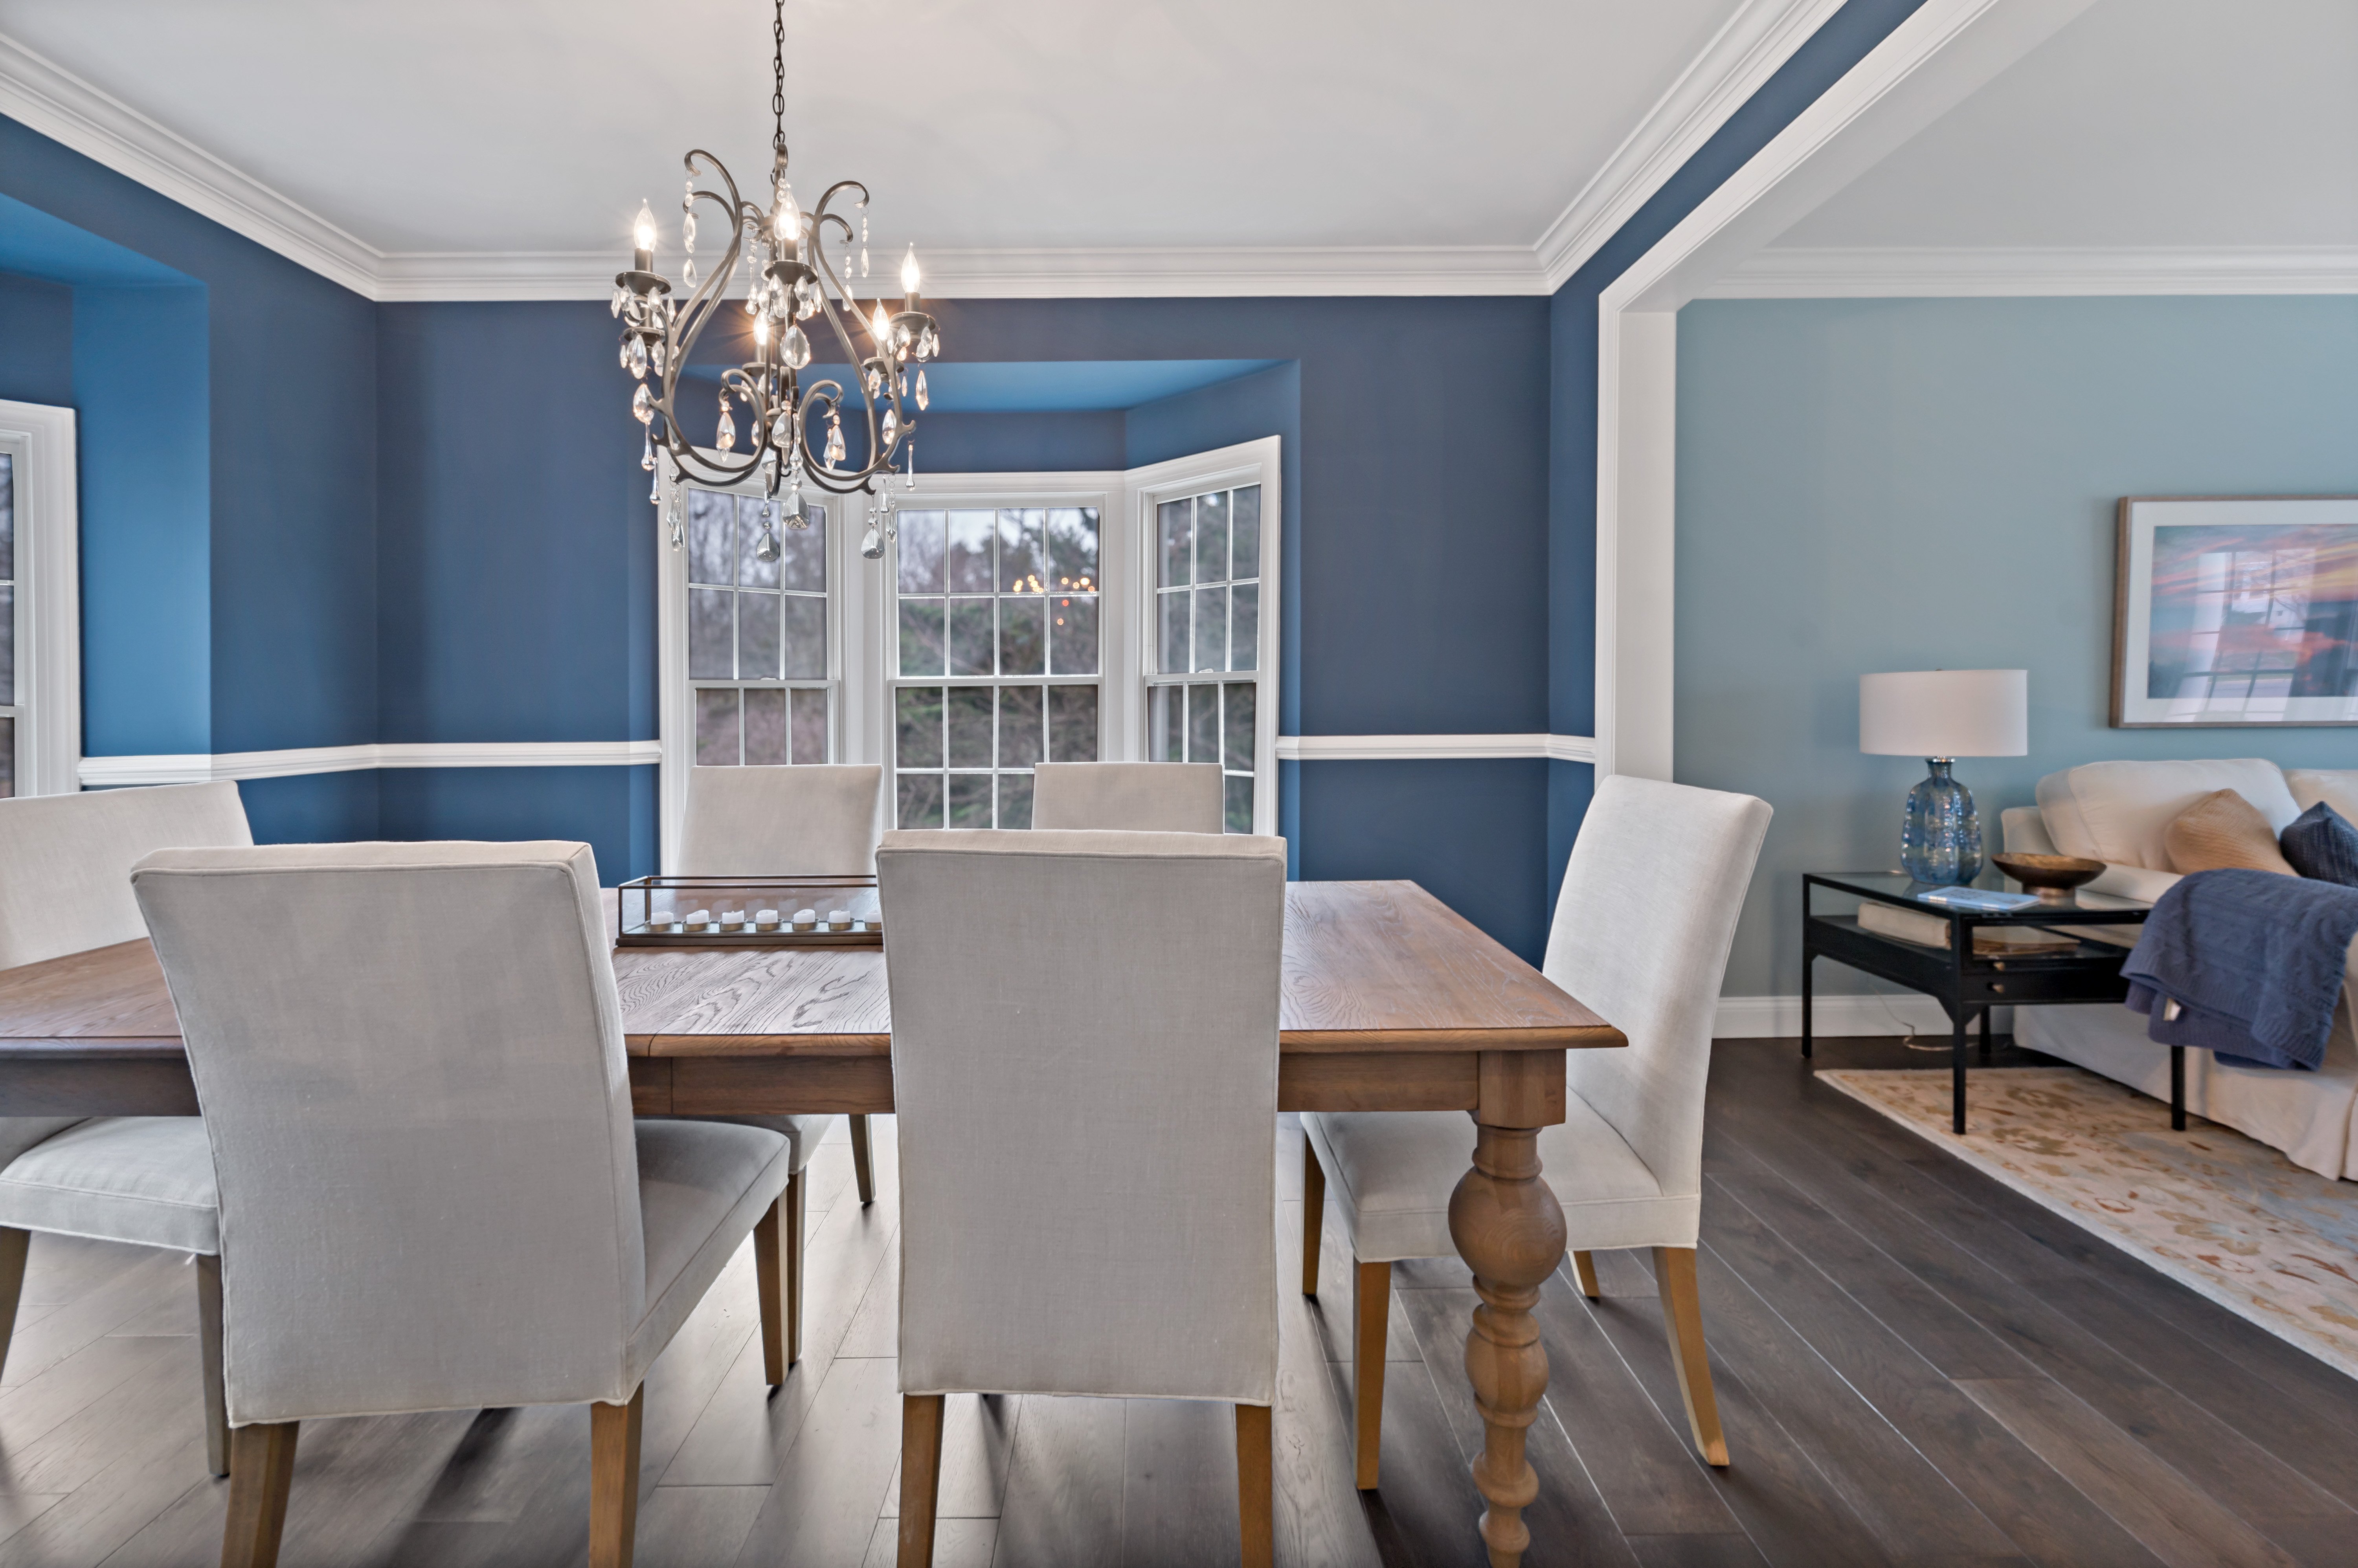 Dining room with dark blue walls